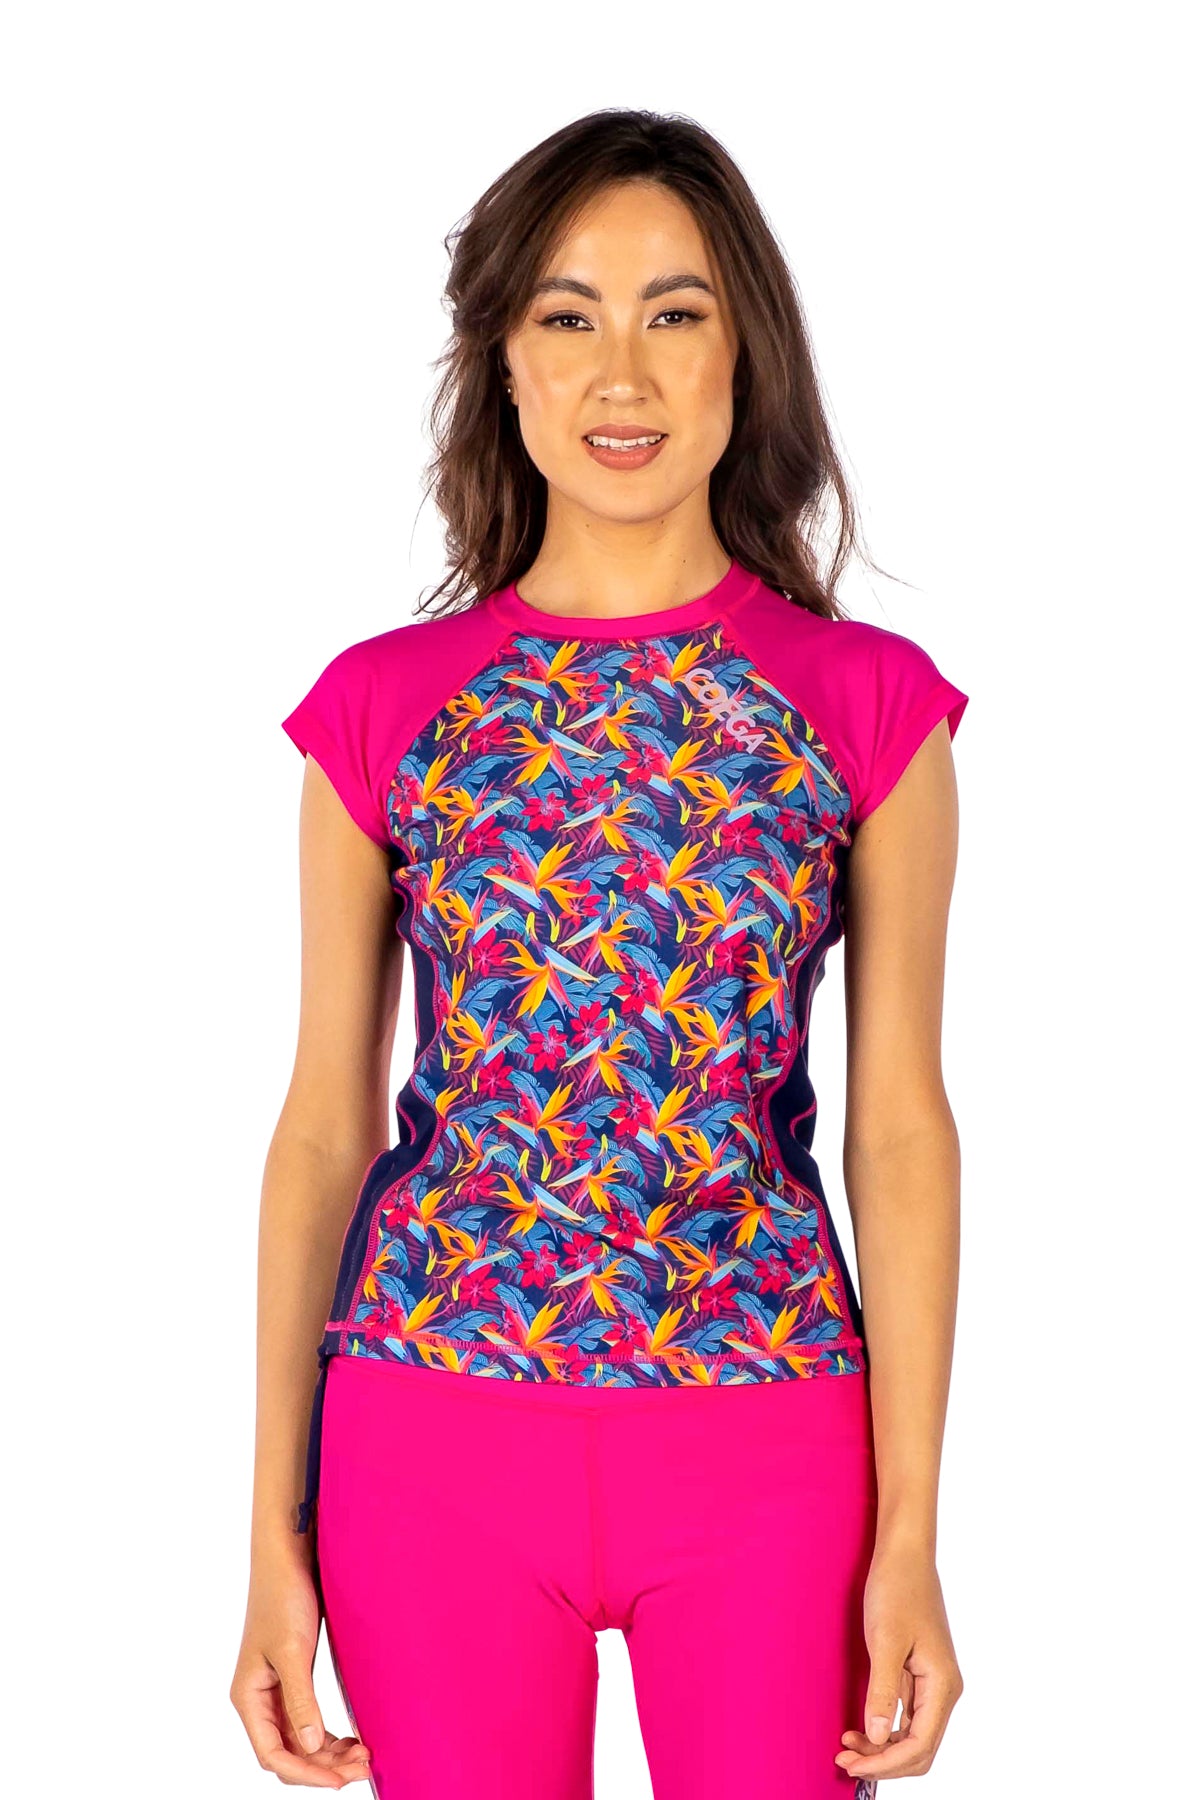 COEGA Ladies Rashguard - Capped Sleeve with Drawstring – COEGA Sunwear  Online Store